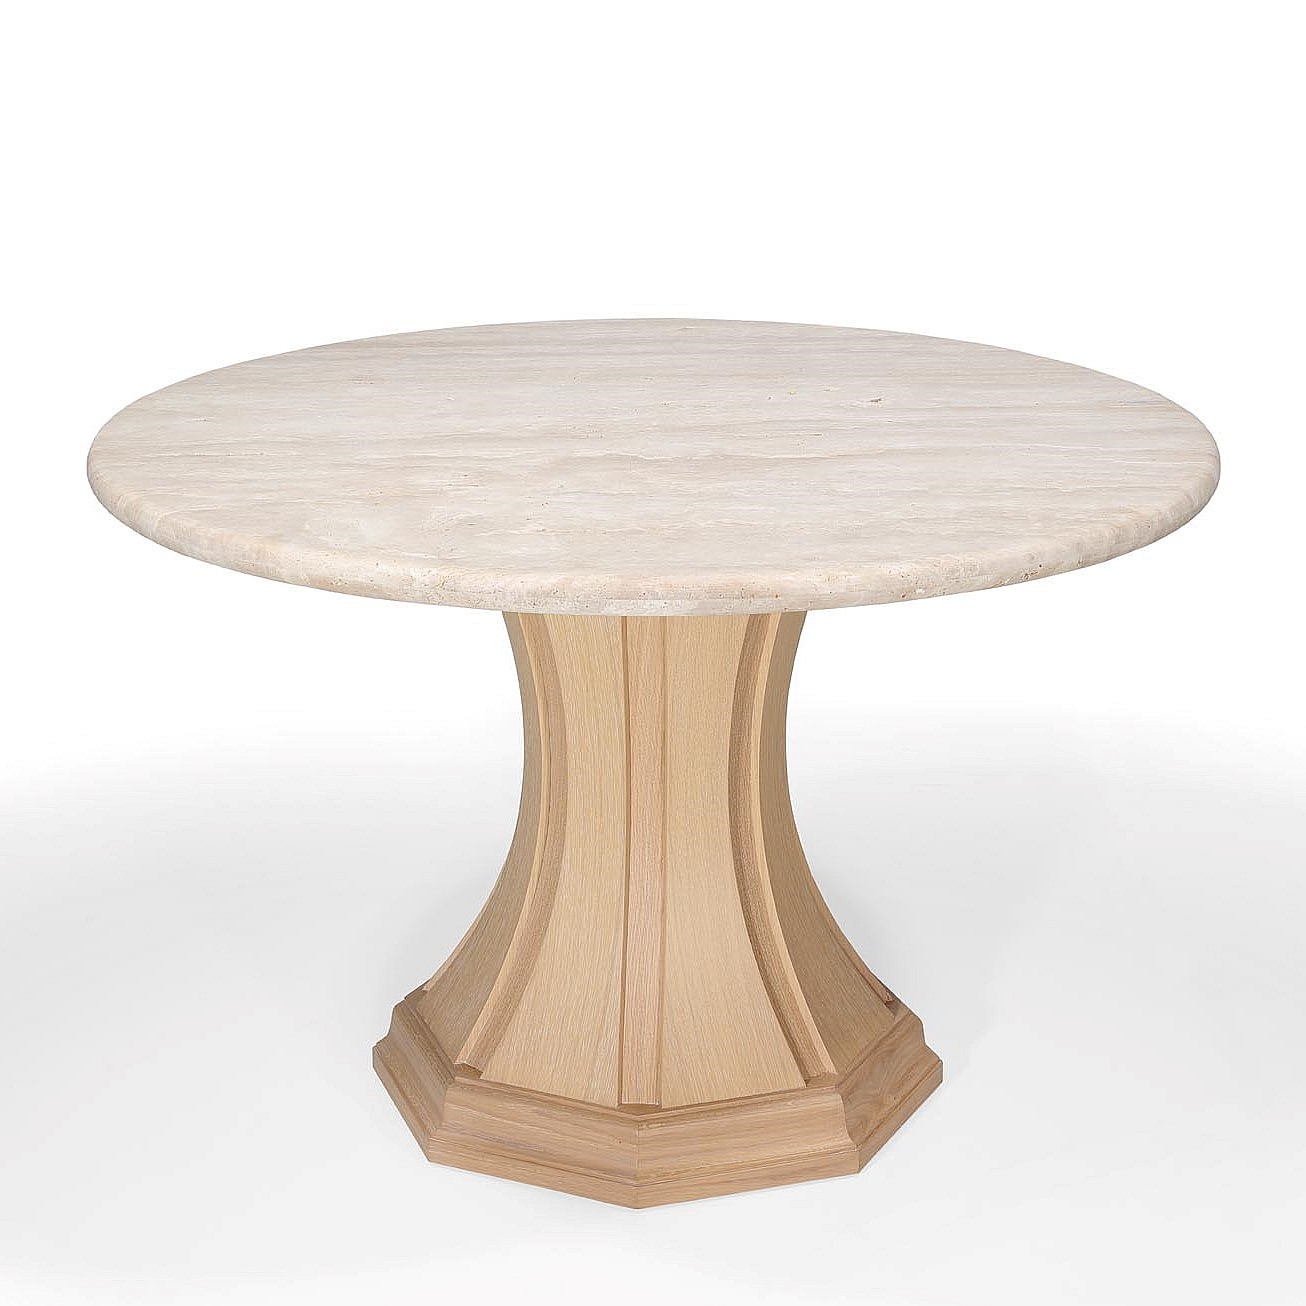 'Chelsea' table, Rita Konig for Oficina Inglesa Furniture